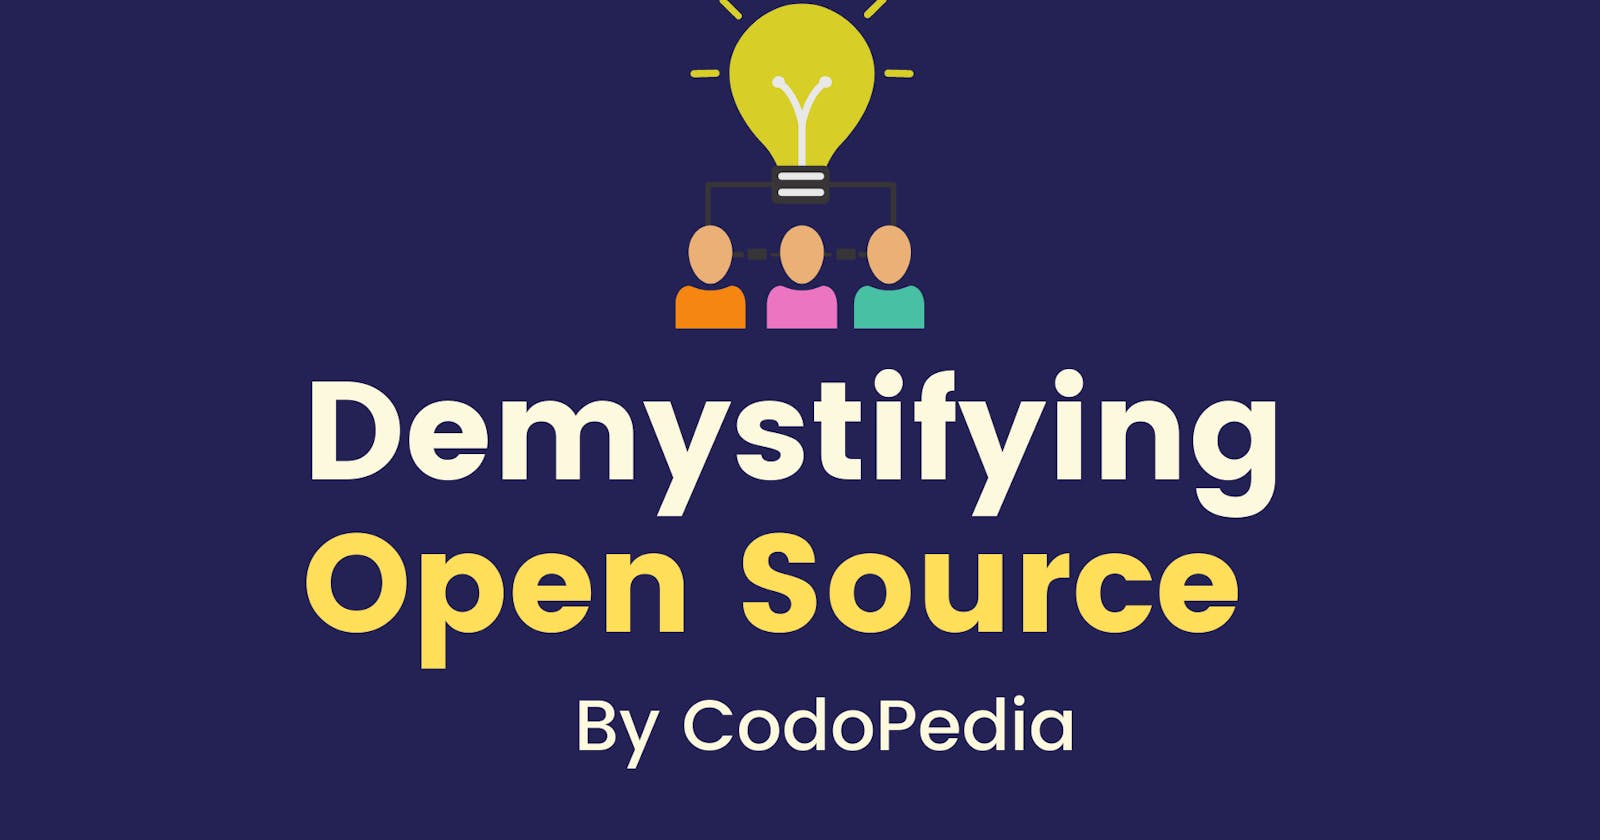 Demystifying Open Source